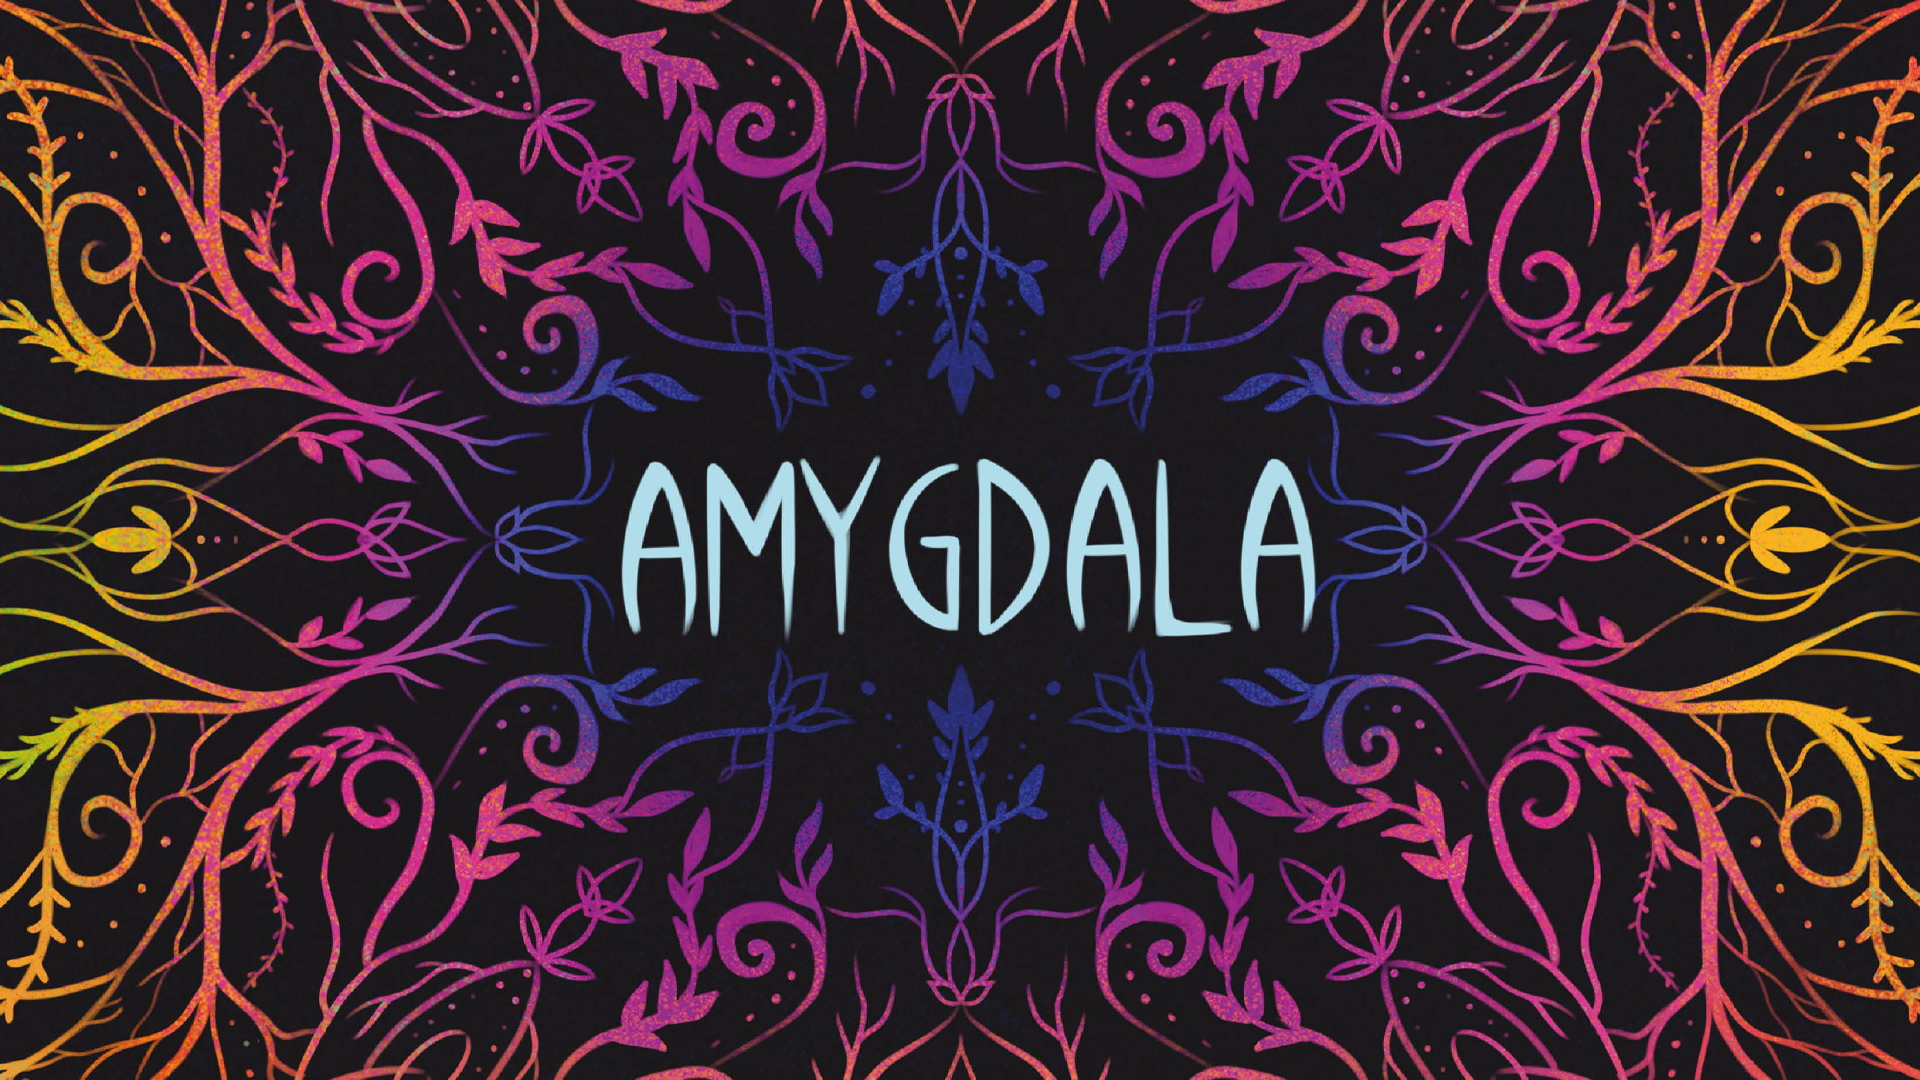 Amygdala's abstract board game cover